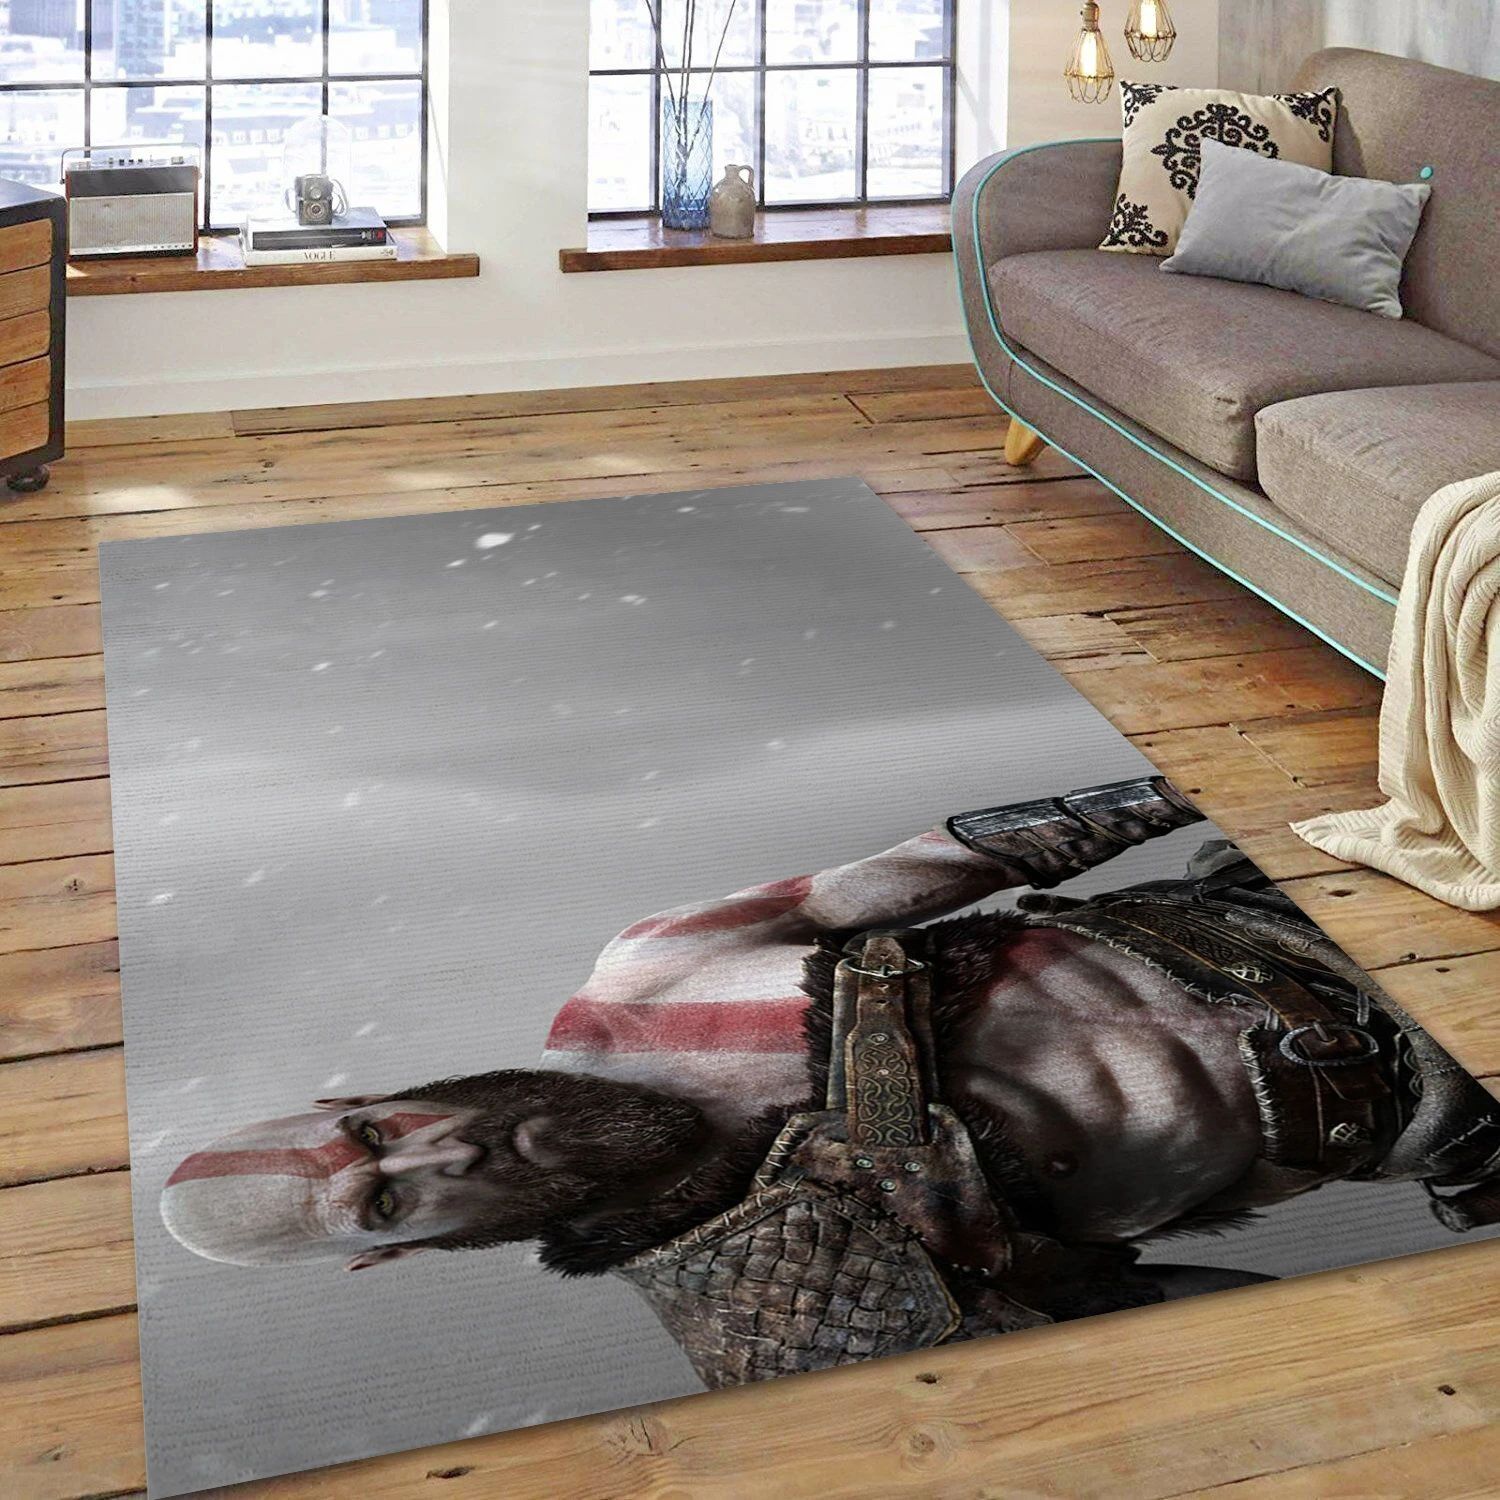 Kratos God Of War Video Game Area Rug Area, Bedroom Rug - Christmas Gift Decor - Indoor Outdoor Rugs